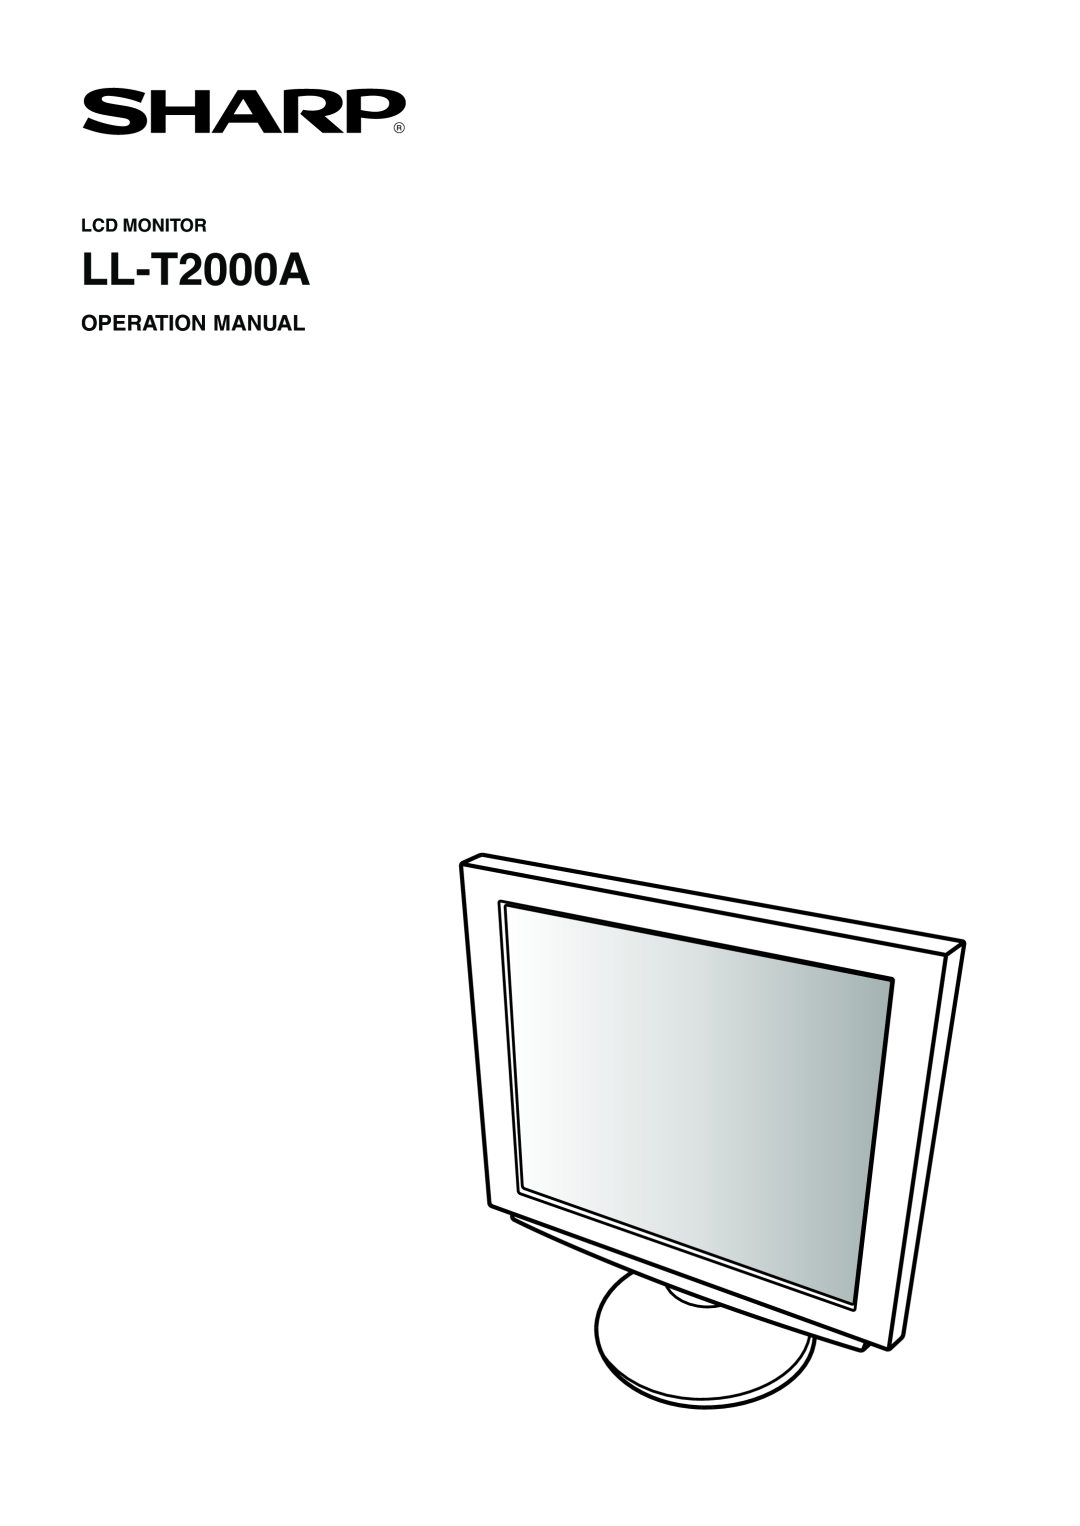 Sharp LL-T2000A operation manual Operation Manual, Lcd Monitor 